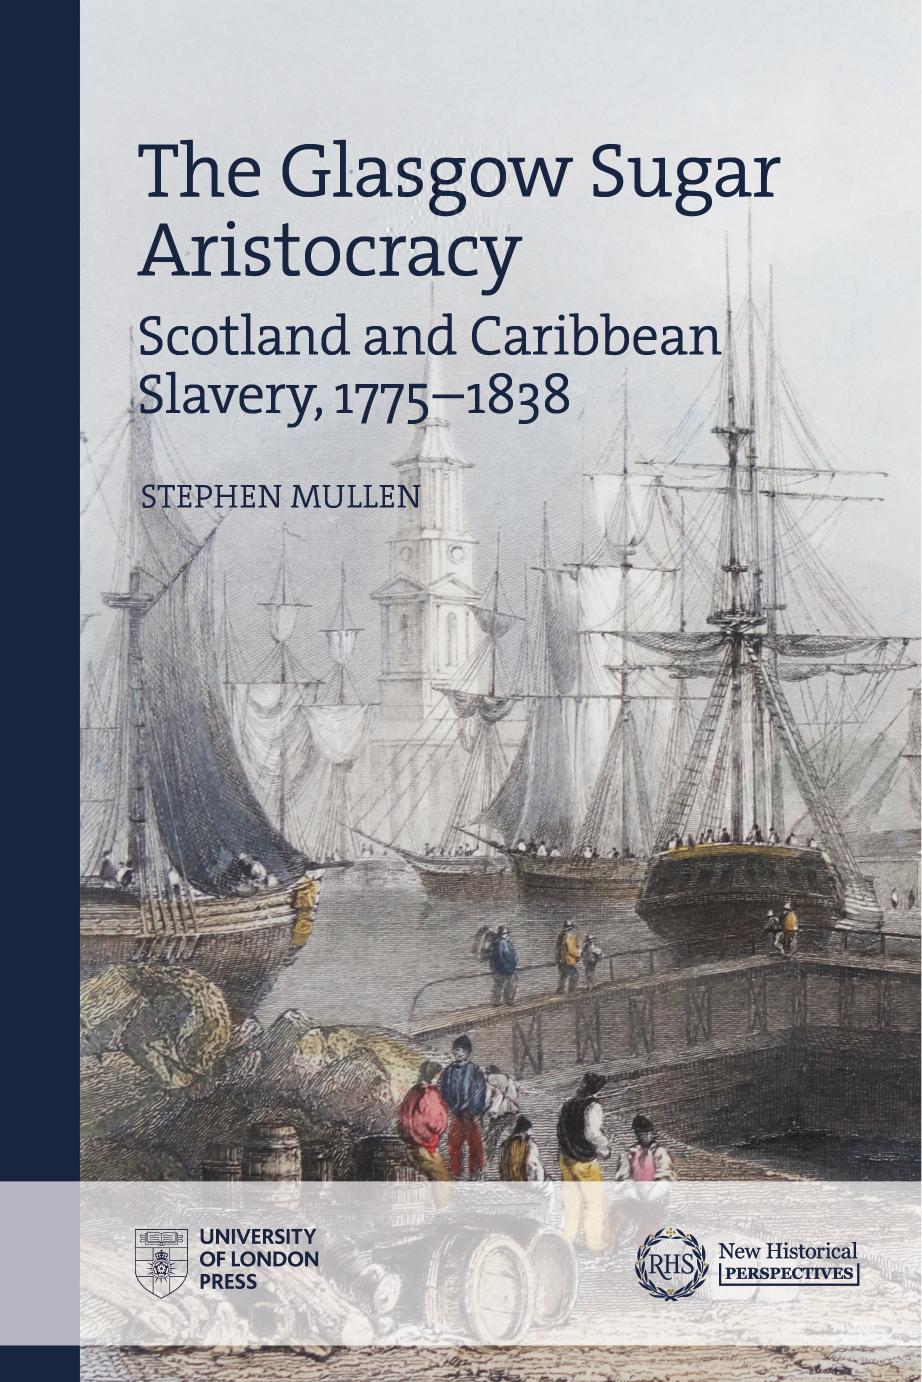 The Glasgow Sugar Aristocracy: Scotland and Caribbean Slavery, 1775â1838 by Stephen Mullen